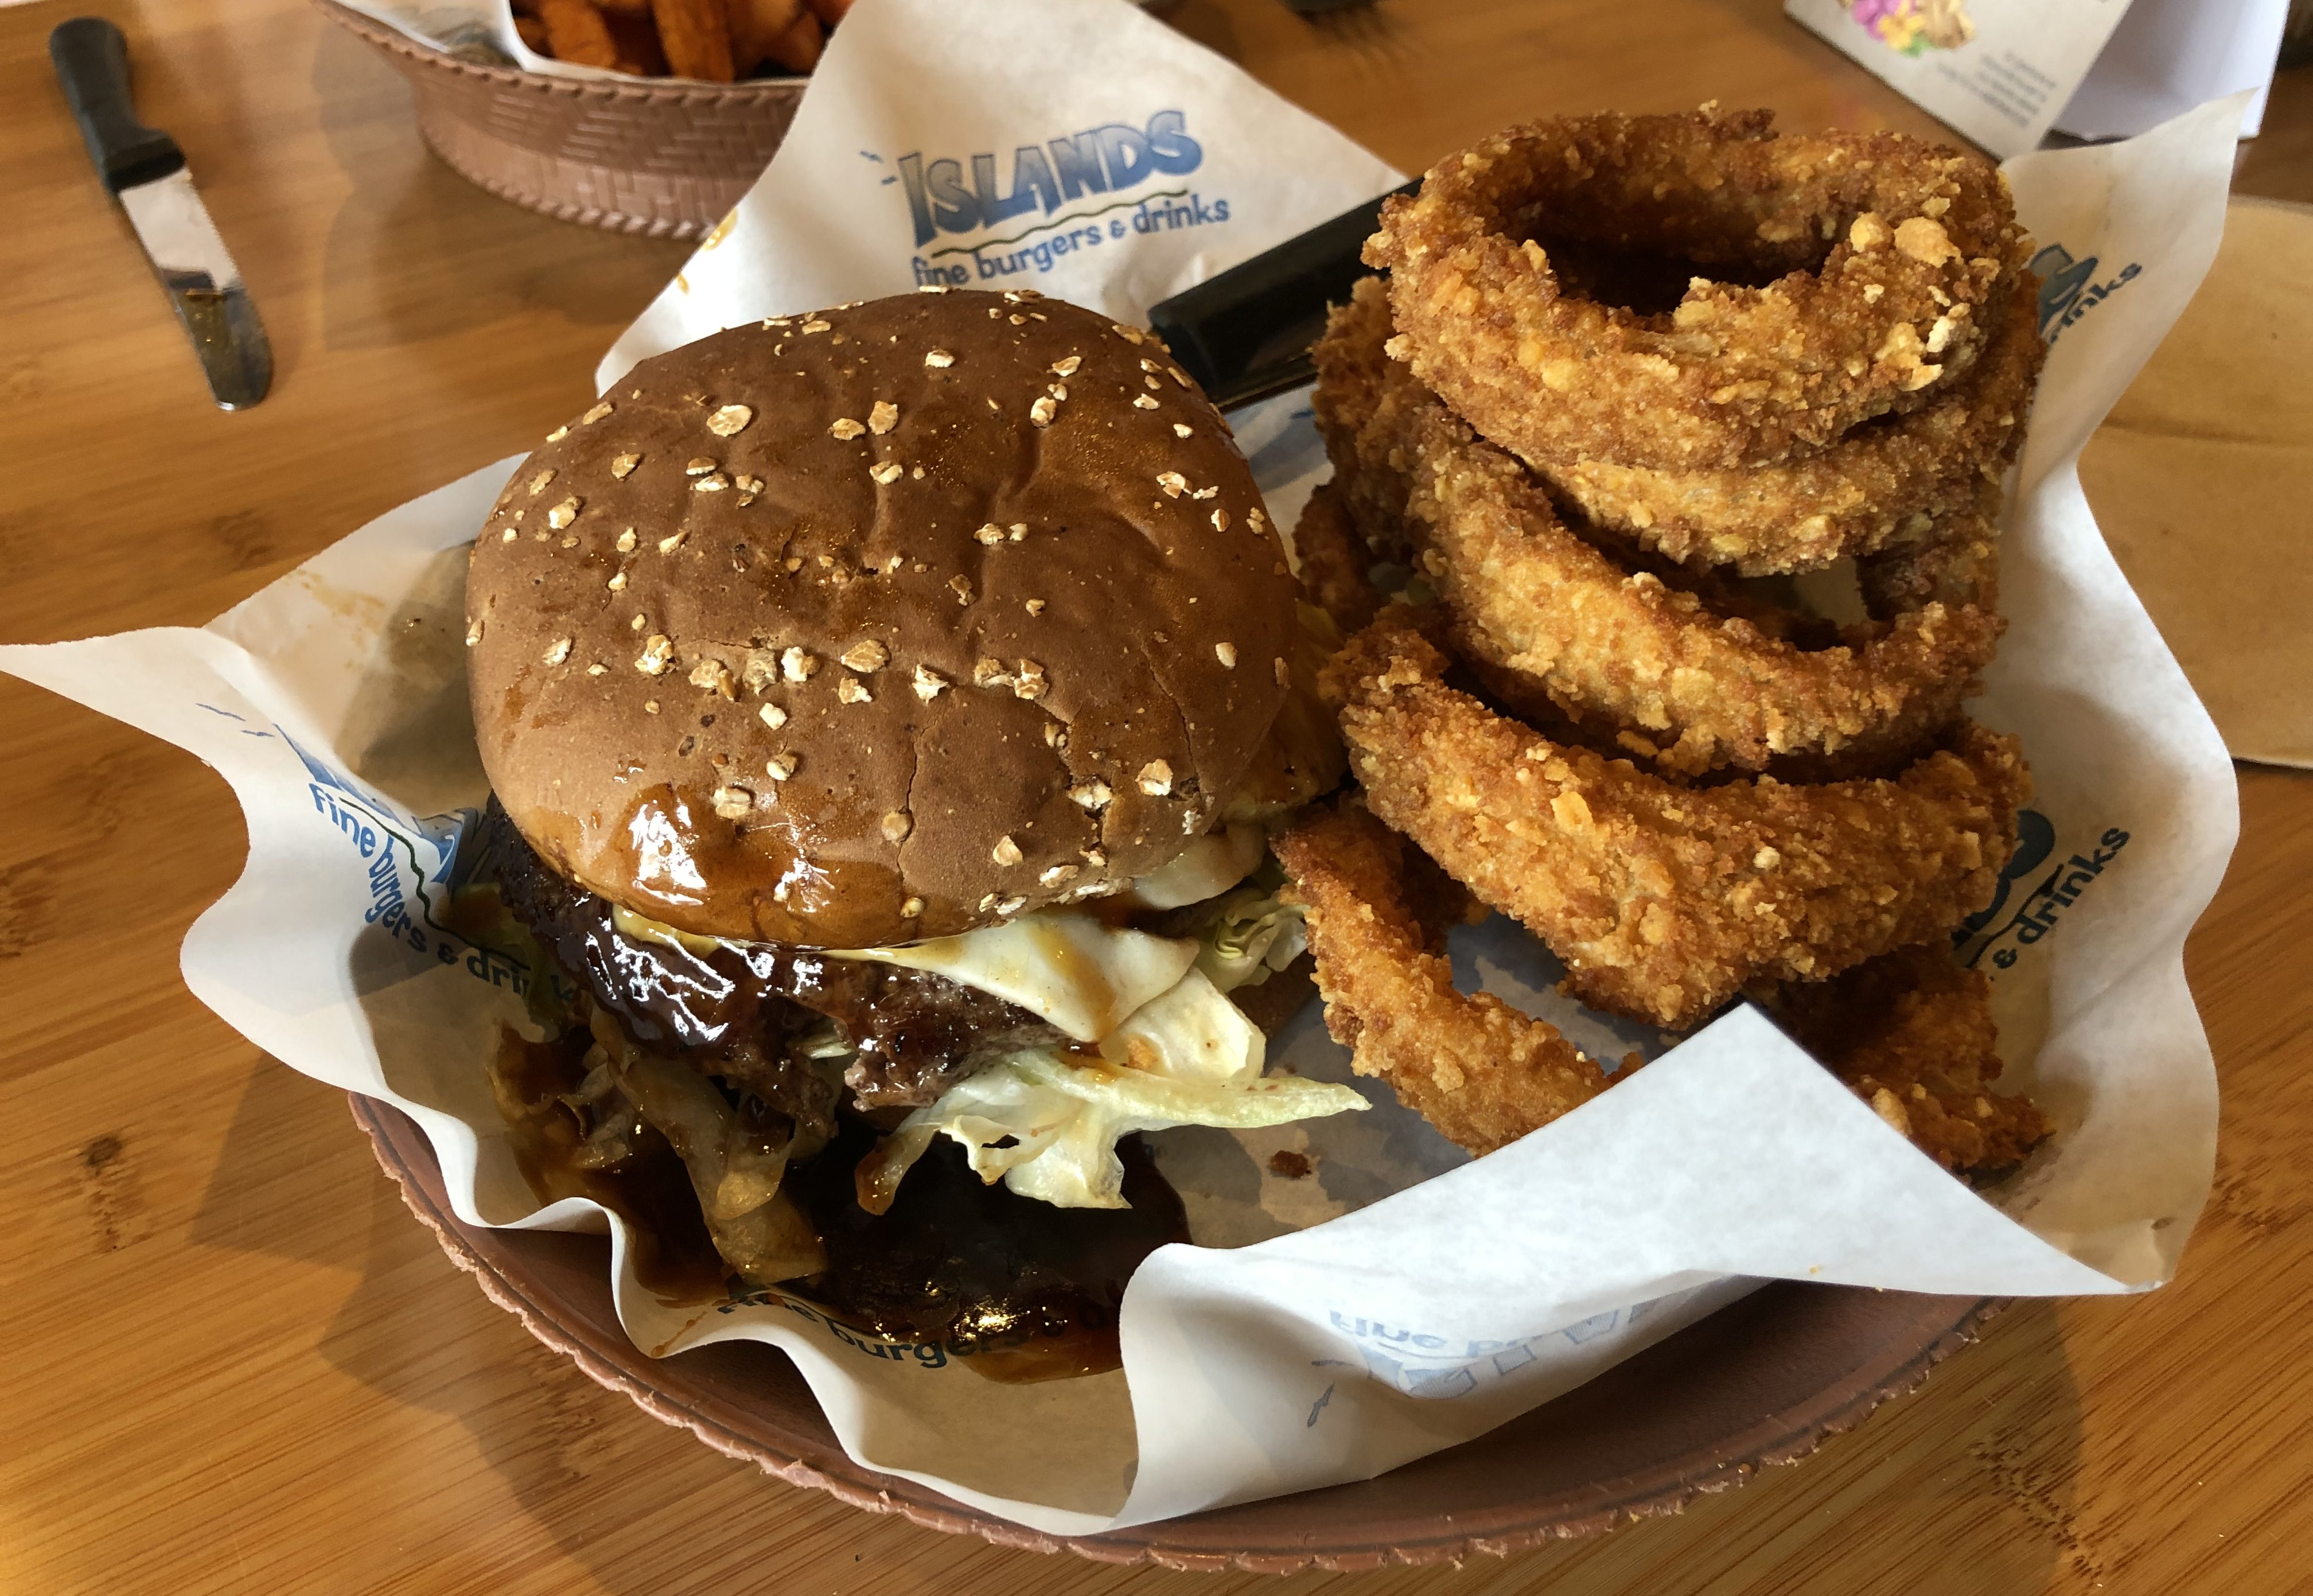 Aaron's Burger at Island Burgers 2019-04-11 16.35.05